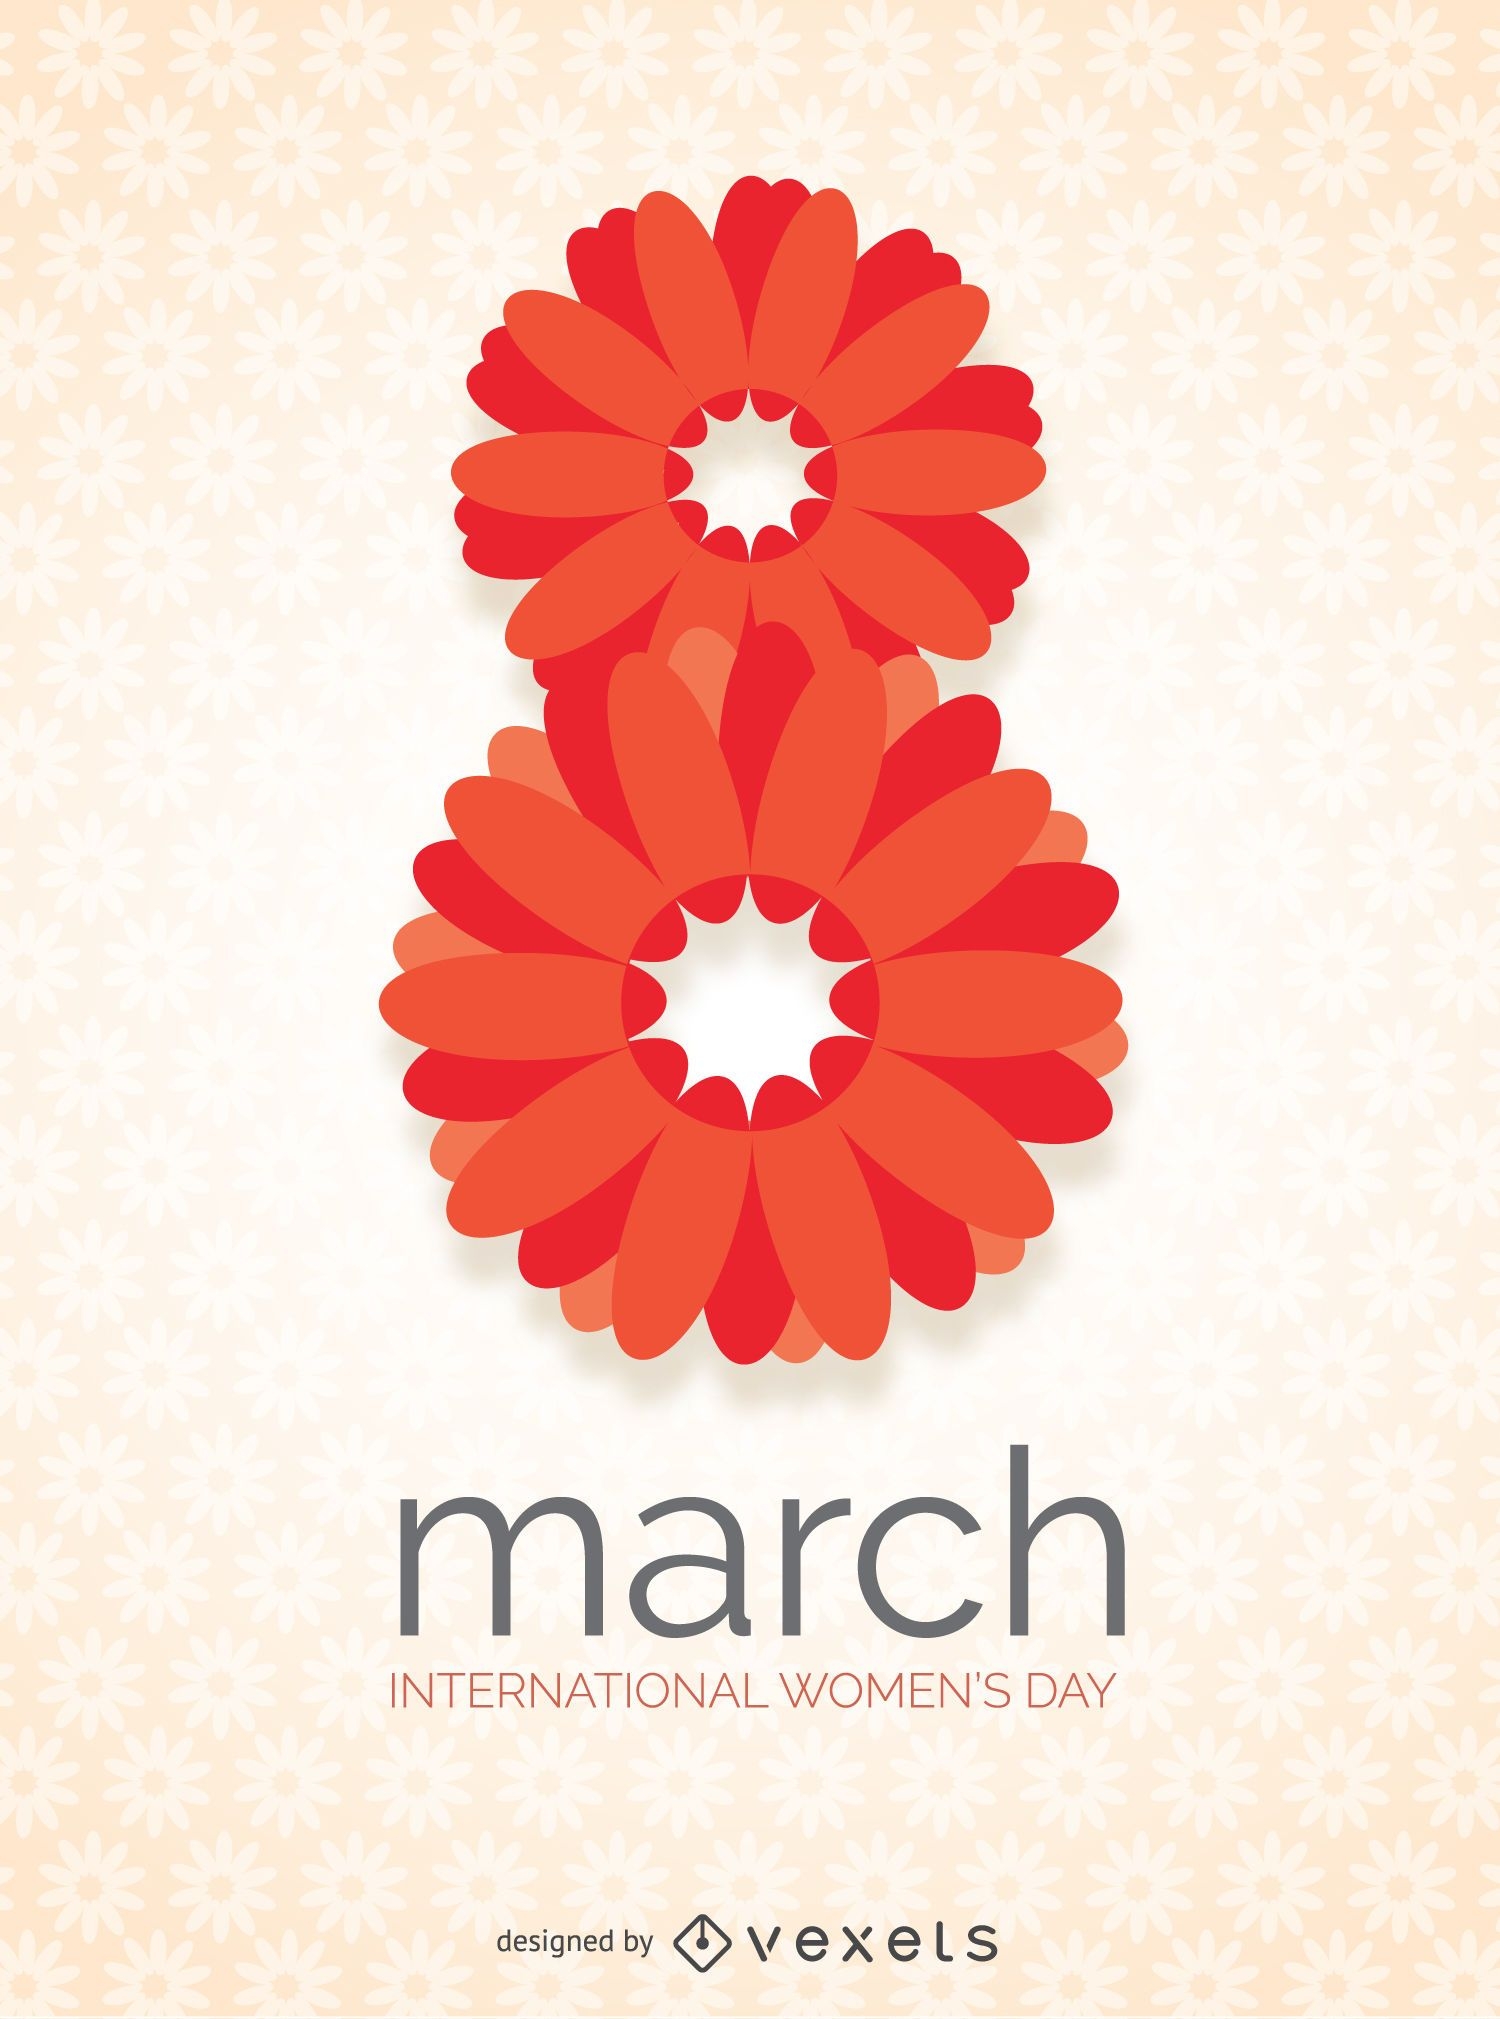 international day of women in floral design